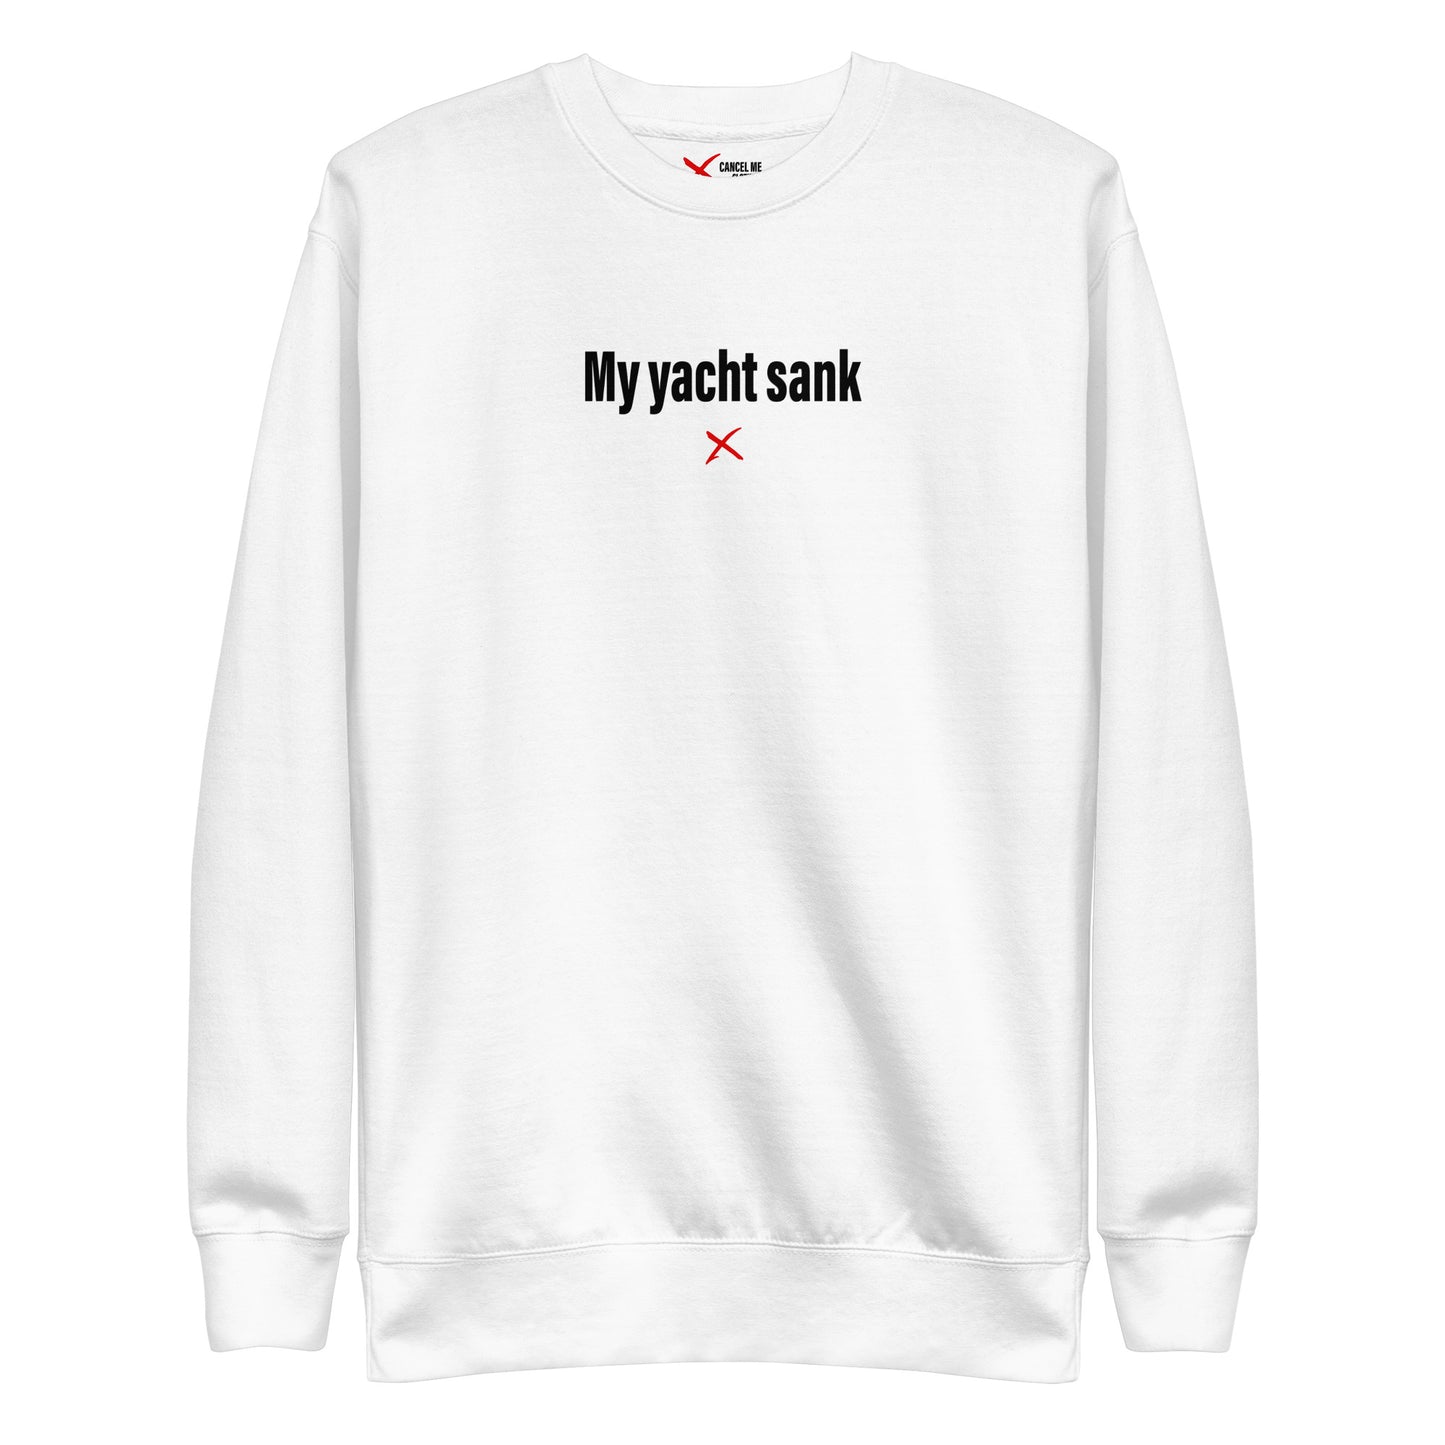 My yacht sank - Sweatshirt